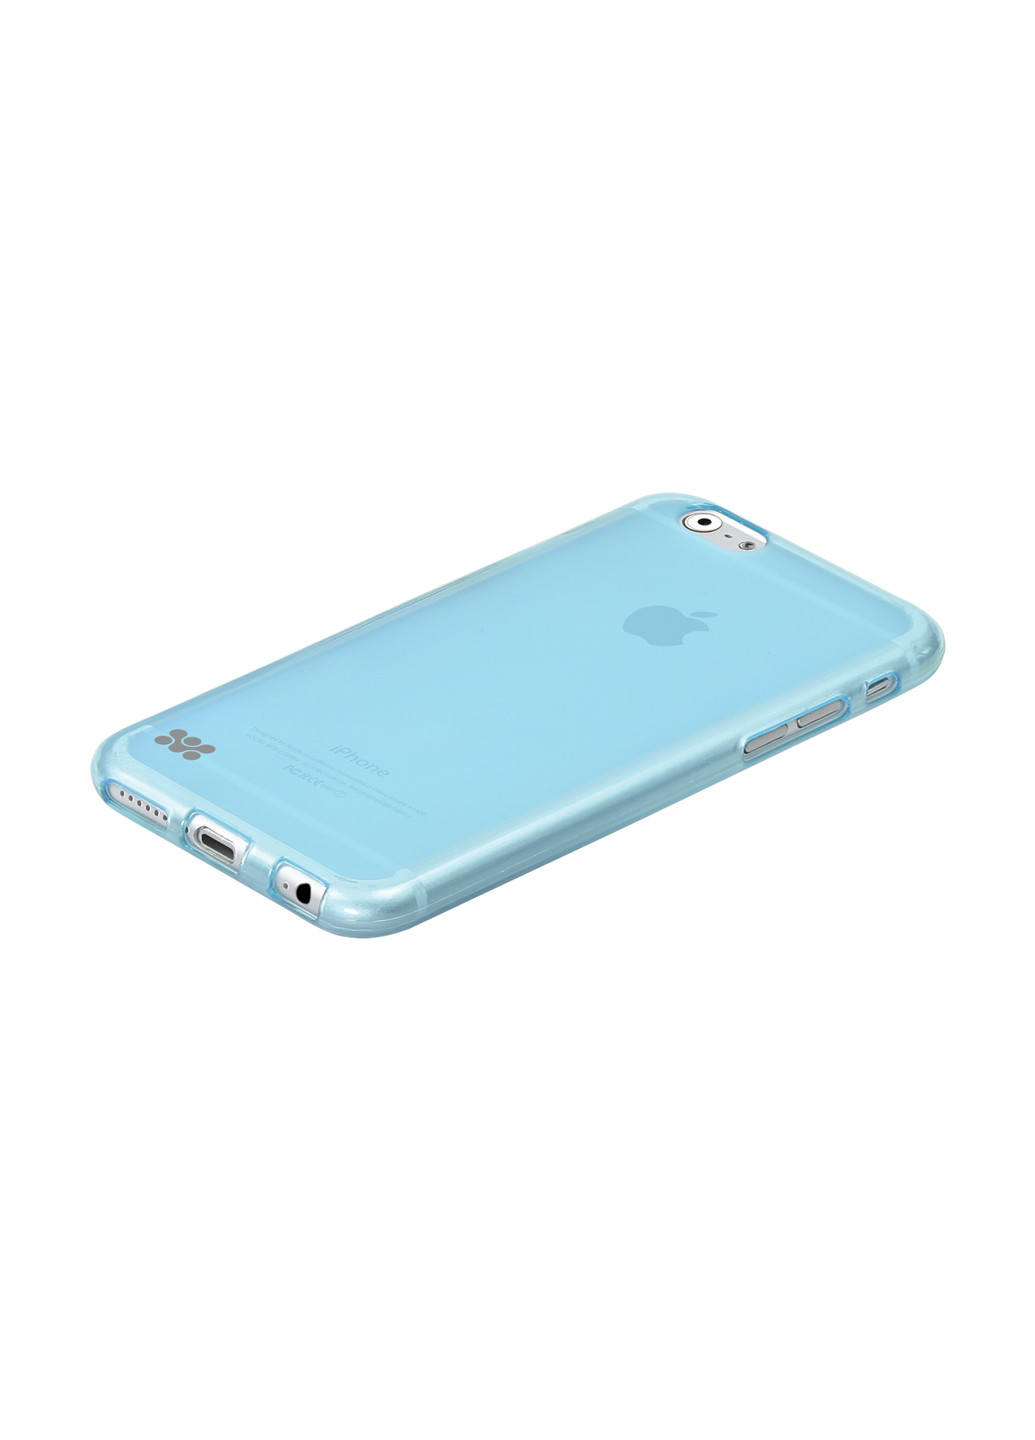 Чехол для iPhone Akton-i6 Blue Promate promate для iphone 6/6s/7 (136919749)